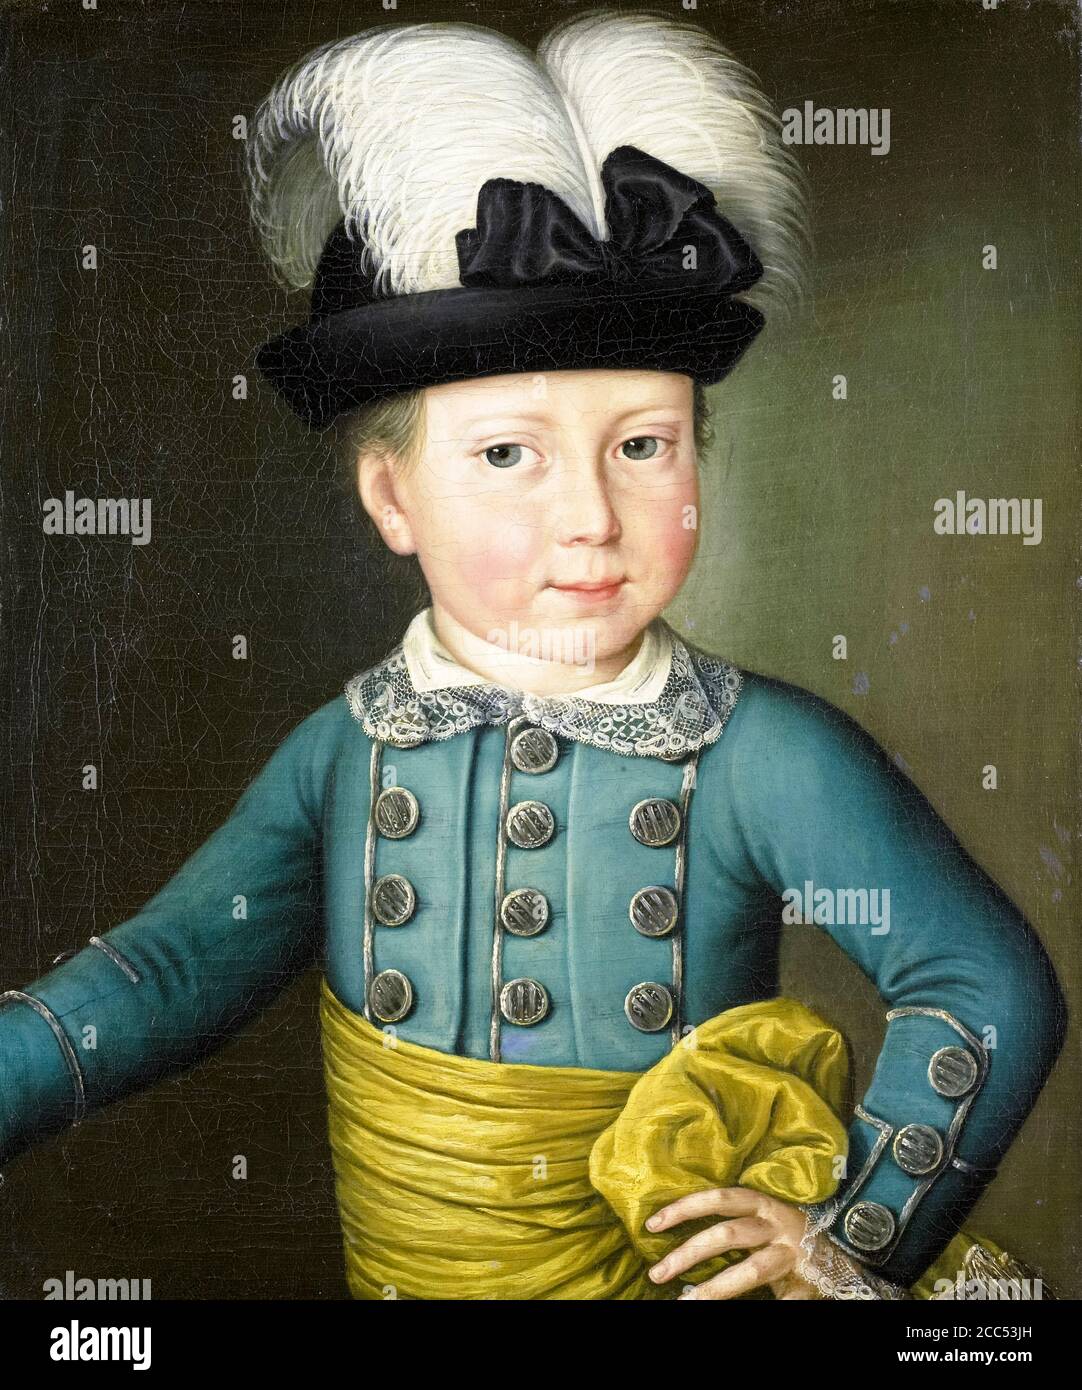 William Frederick (1772-1843), Prince of Orange-Nassau, later King William I, as a child, portrait painting circa 1775 Stock Photo